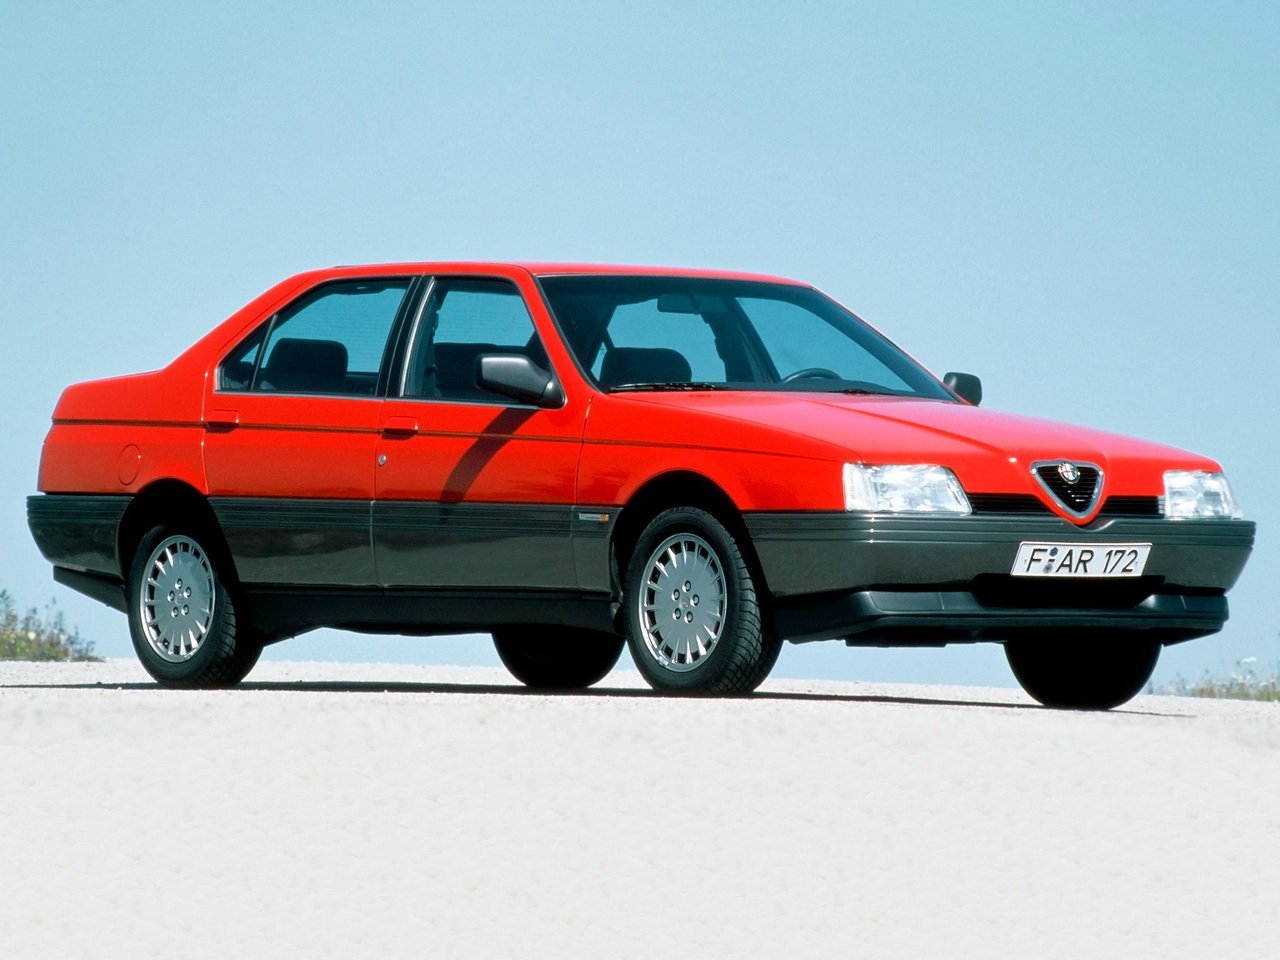 Расход газа двух комплектаций седана Alfa Romeo 164. Разница стоимости заправки газом и бензином. Автономный пробег до и после установки ГБО.